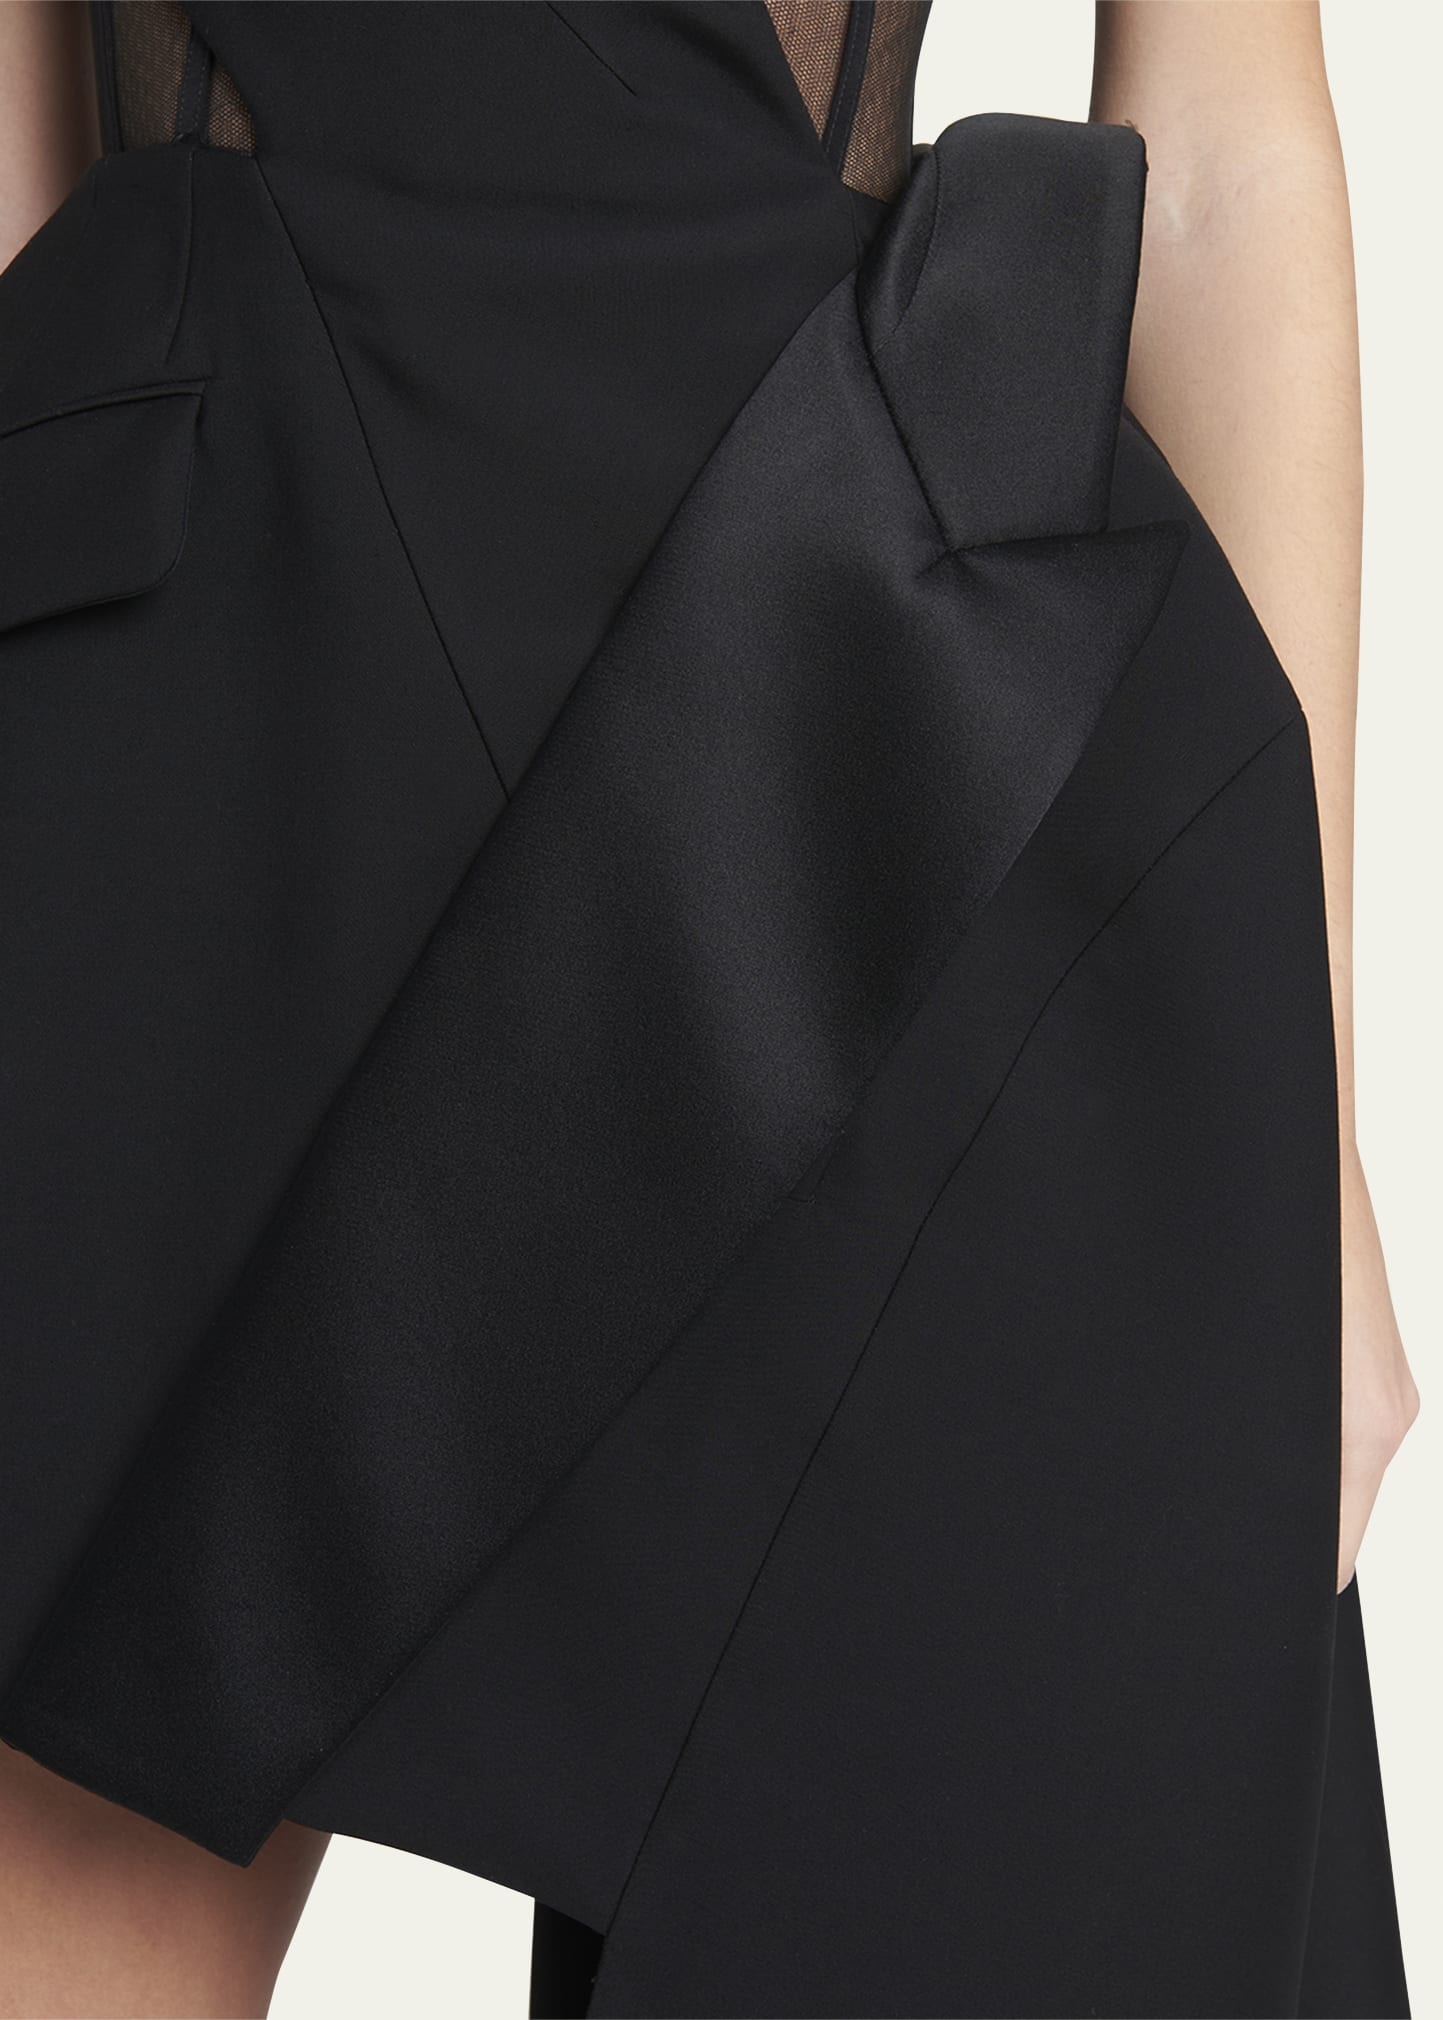 Alexander McQueen Asymmetric Drape Leather Bustier Mini Dress